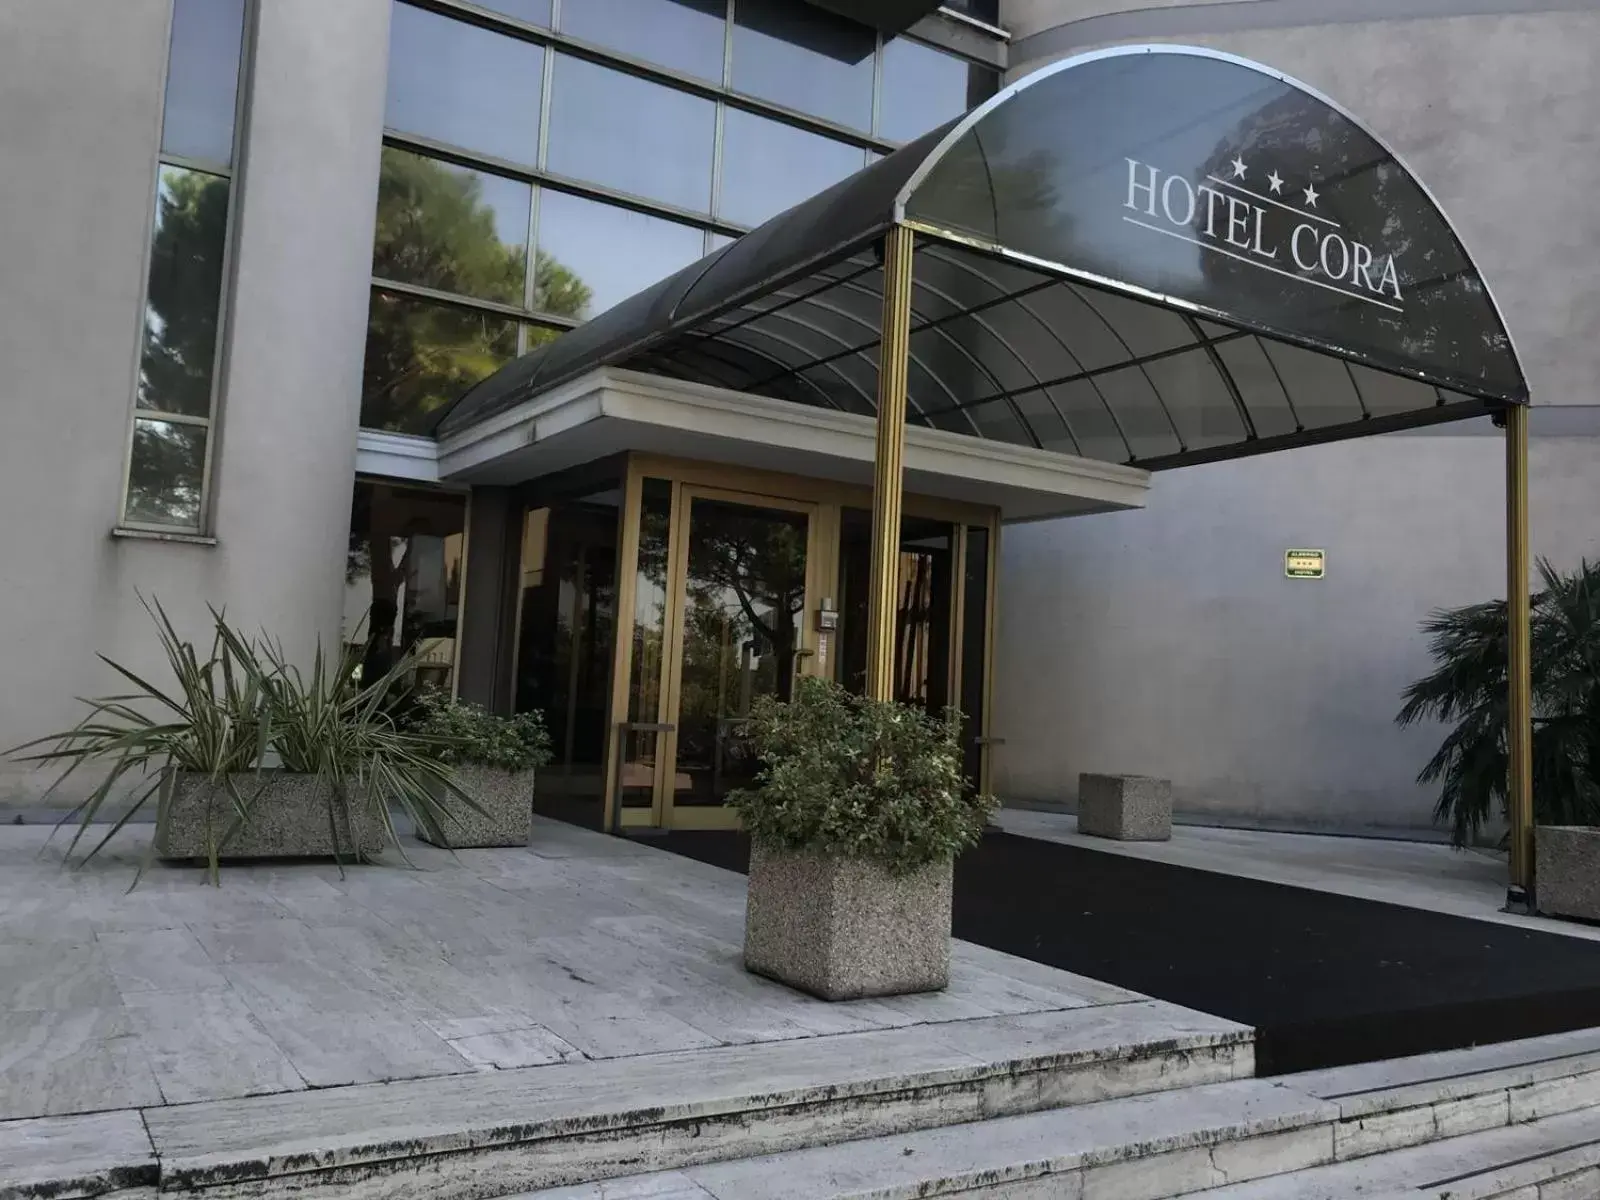 Facade/entrance in Hotel Cora